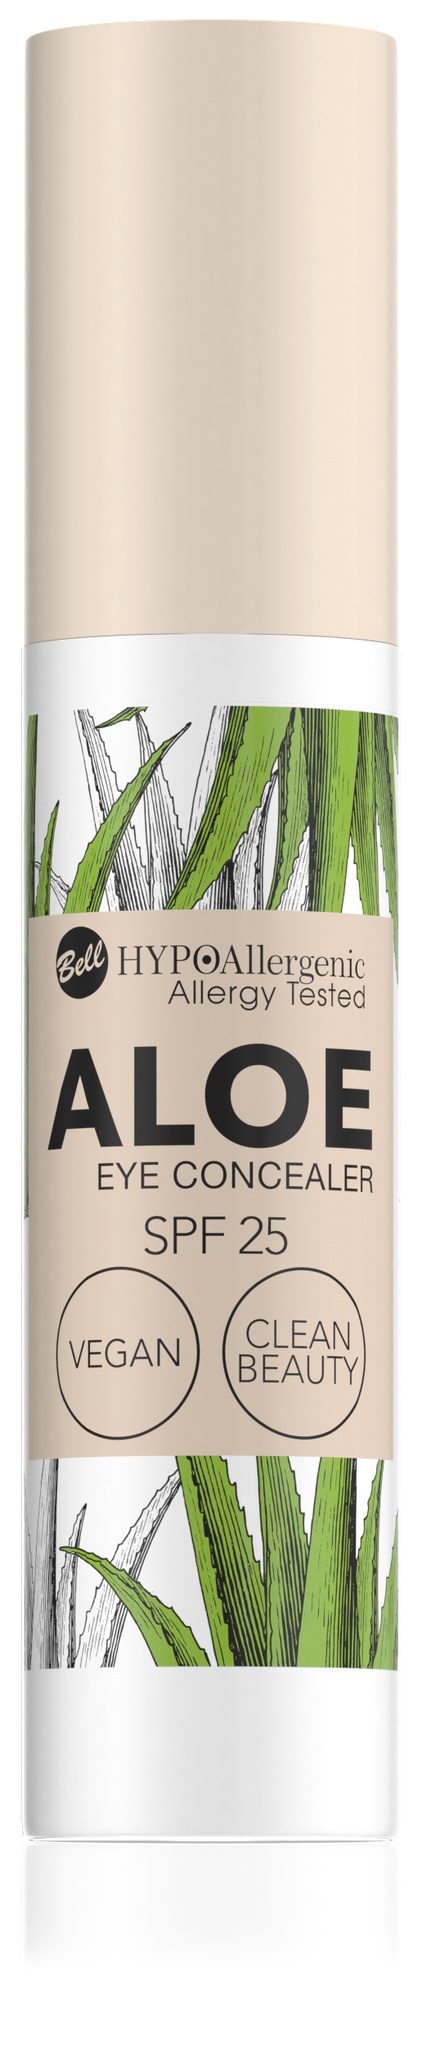 Bell HYPOAllergenic Aloe Eye Concealer SPF 25